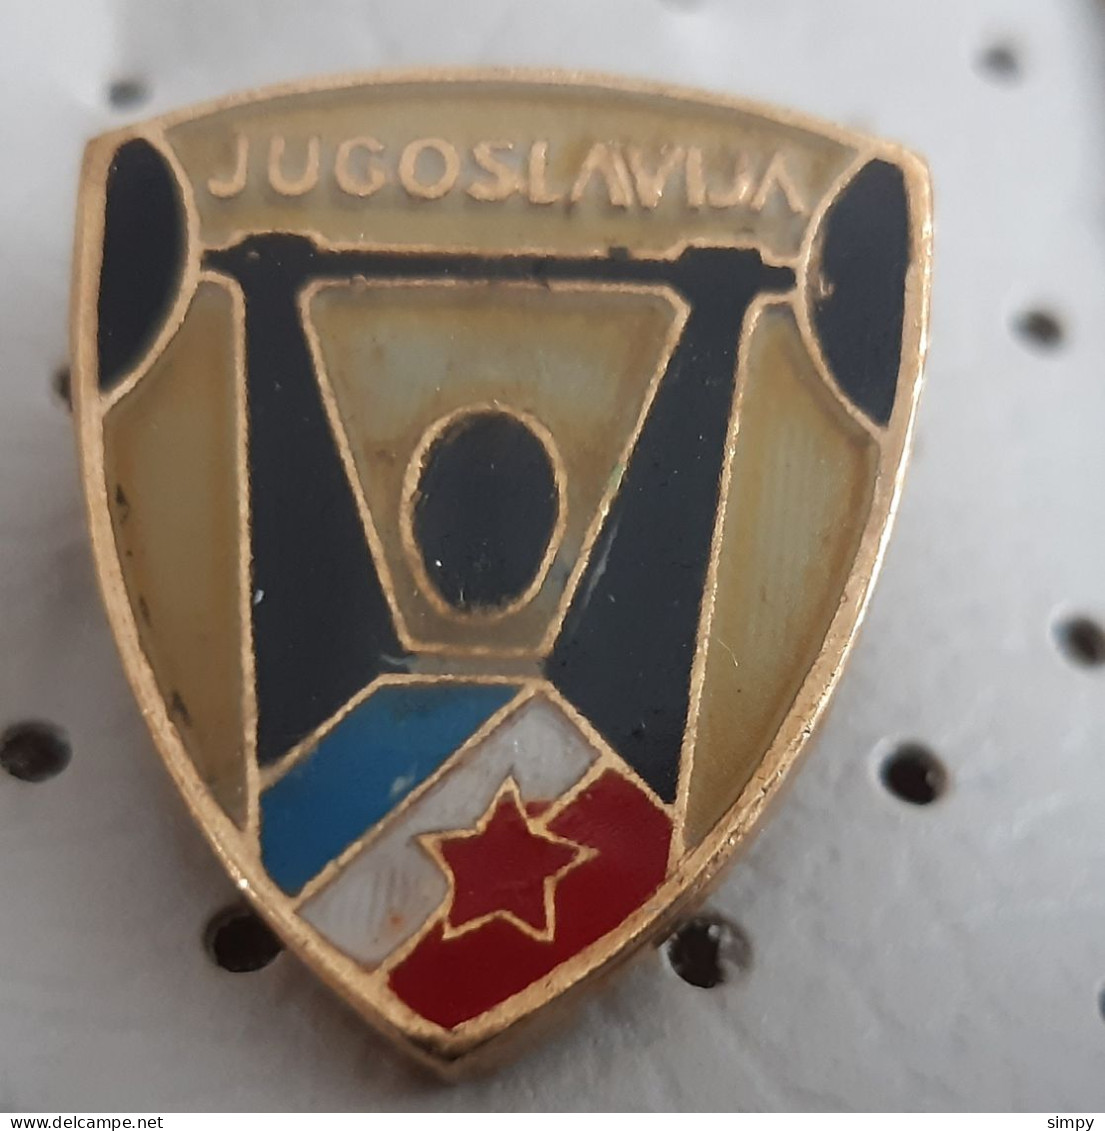 Yugoslavia Weightlifting Federation Vintage Pins - Weightlifting